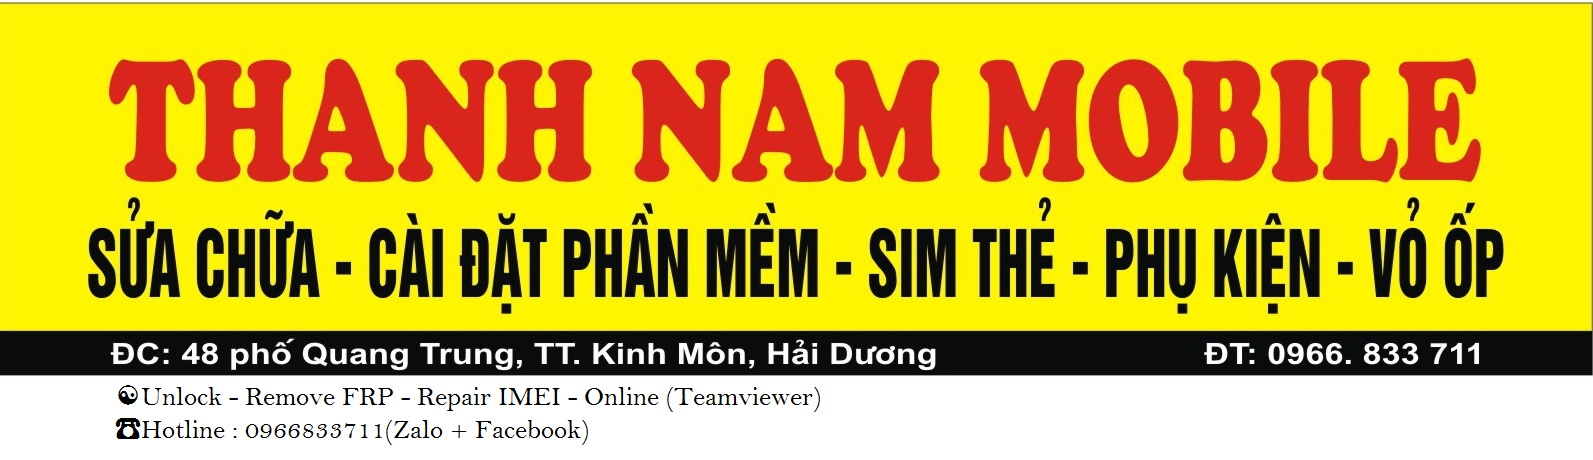 Thanh Nam Mobile